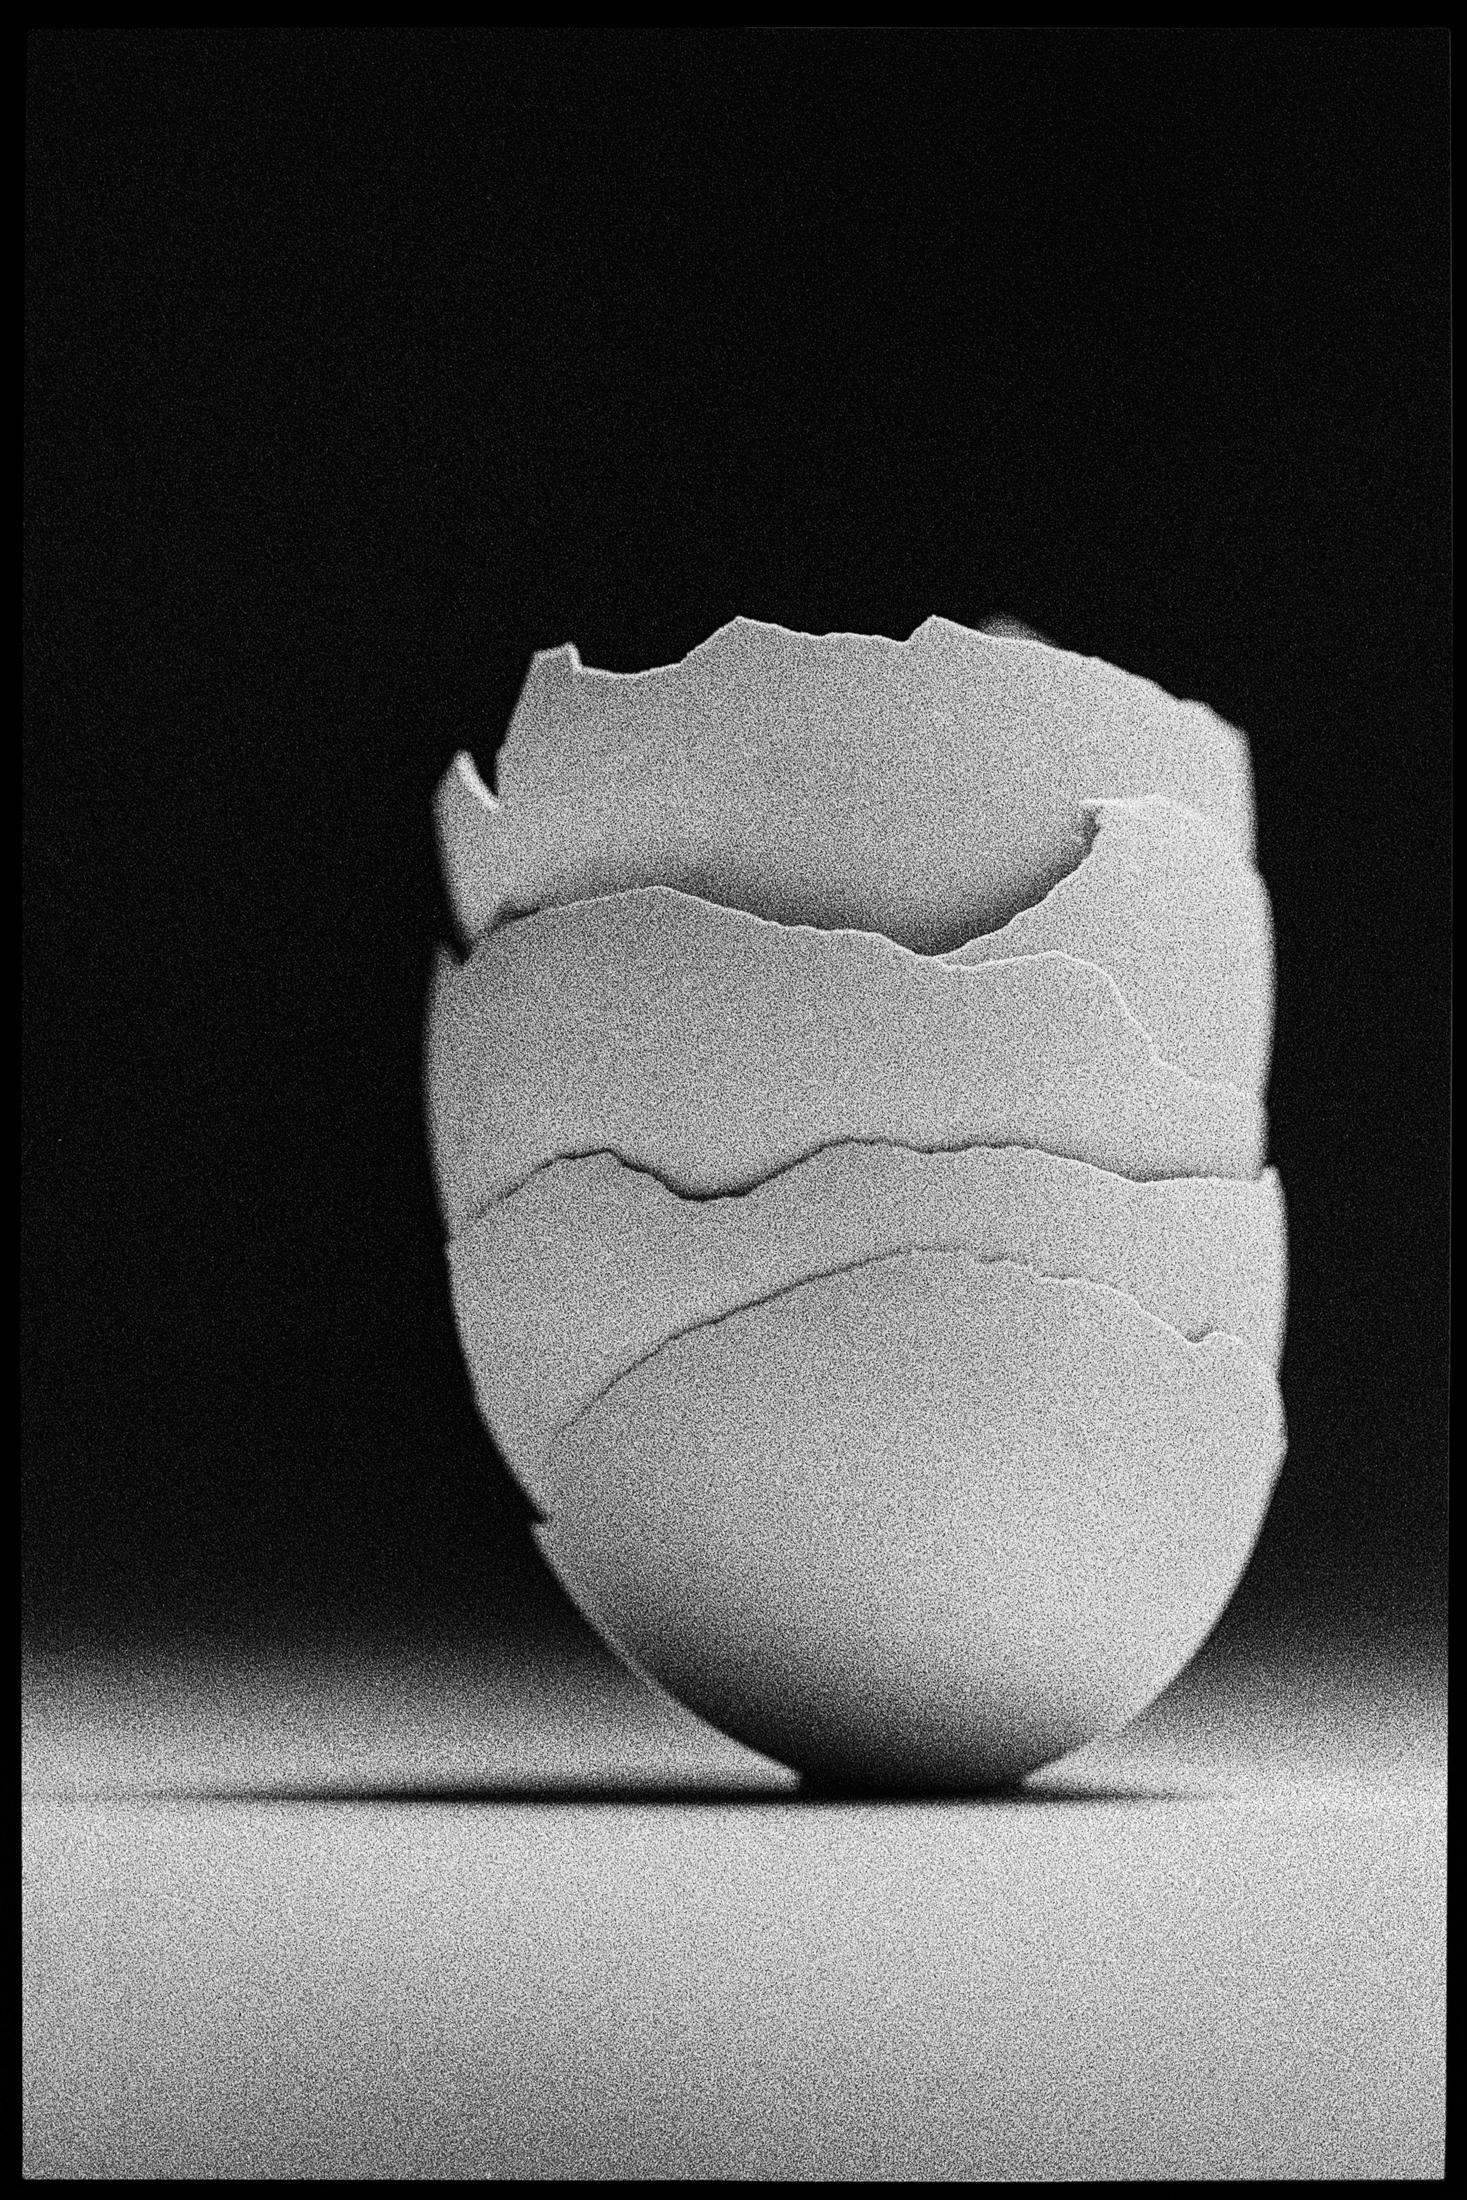 Shine Huang Black and White Photograph - Egg Study 17. Still Life . Black and White Silver Gelatin Print